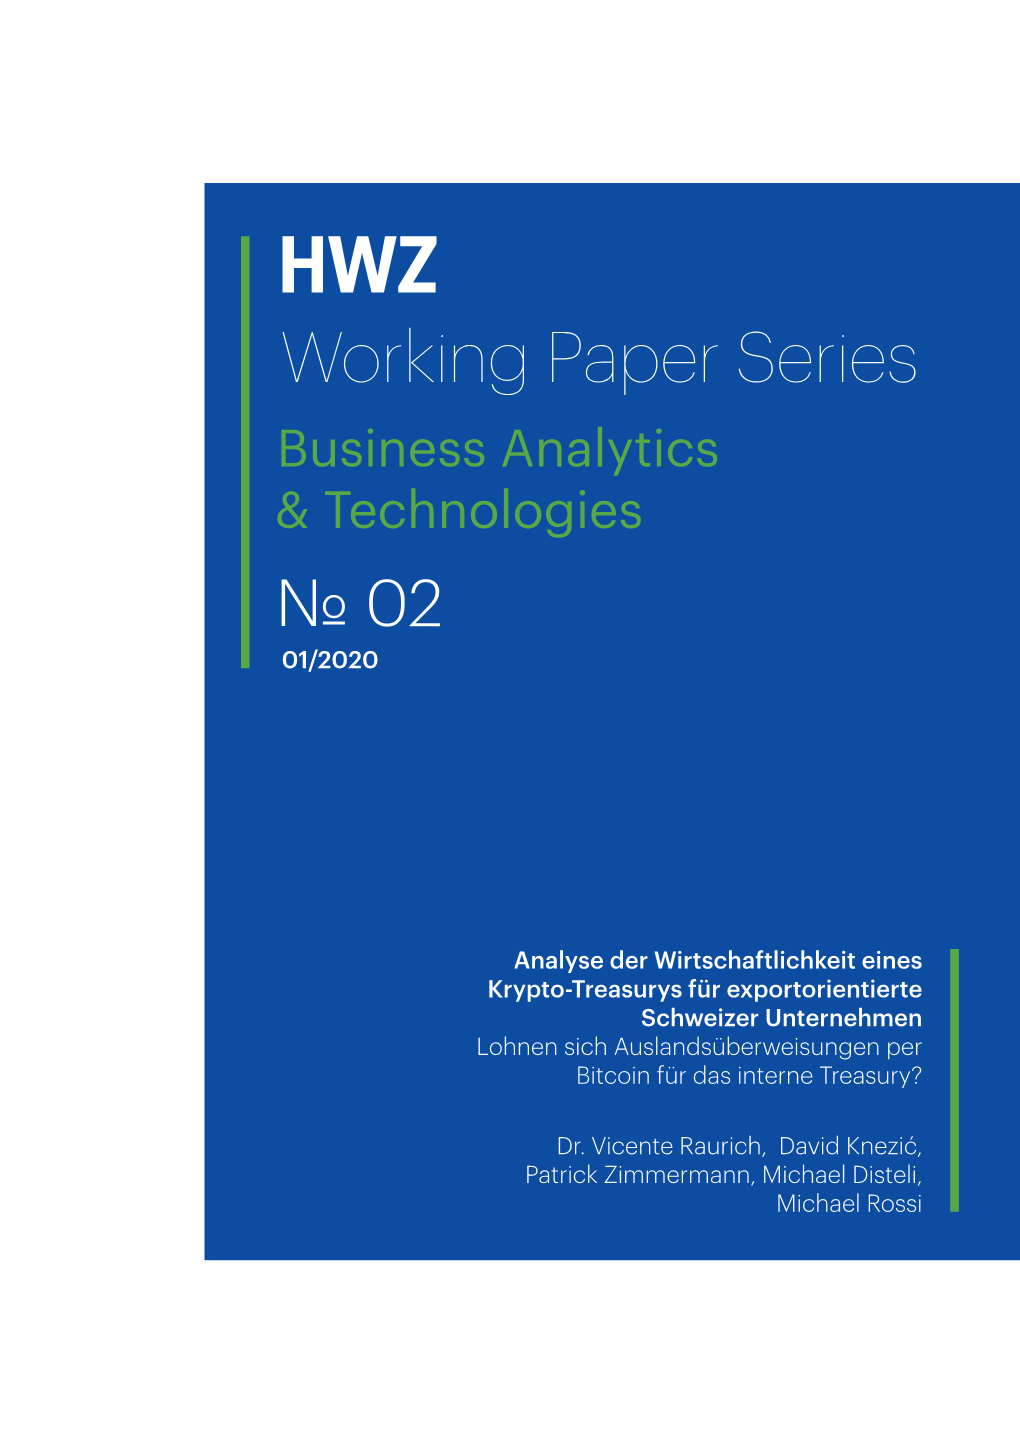 Working Paper Series Business Analytics & Technologies 02 01/2020